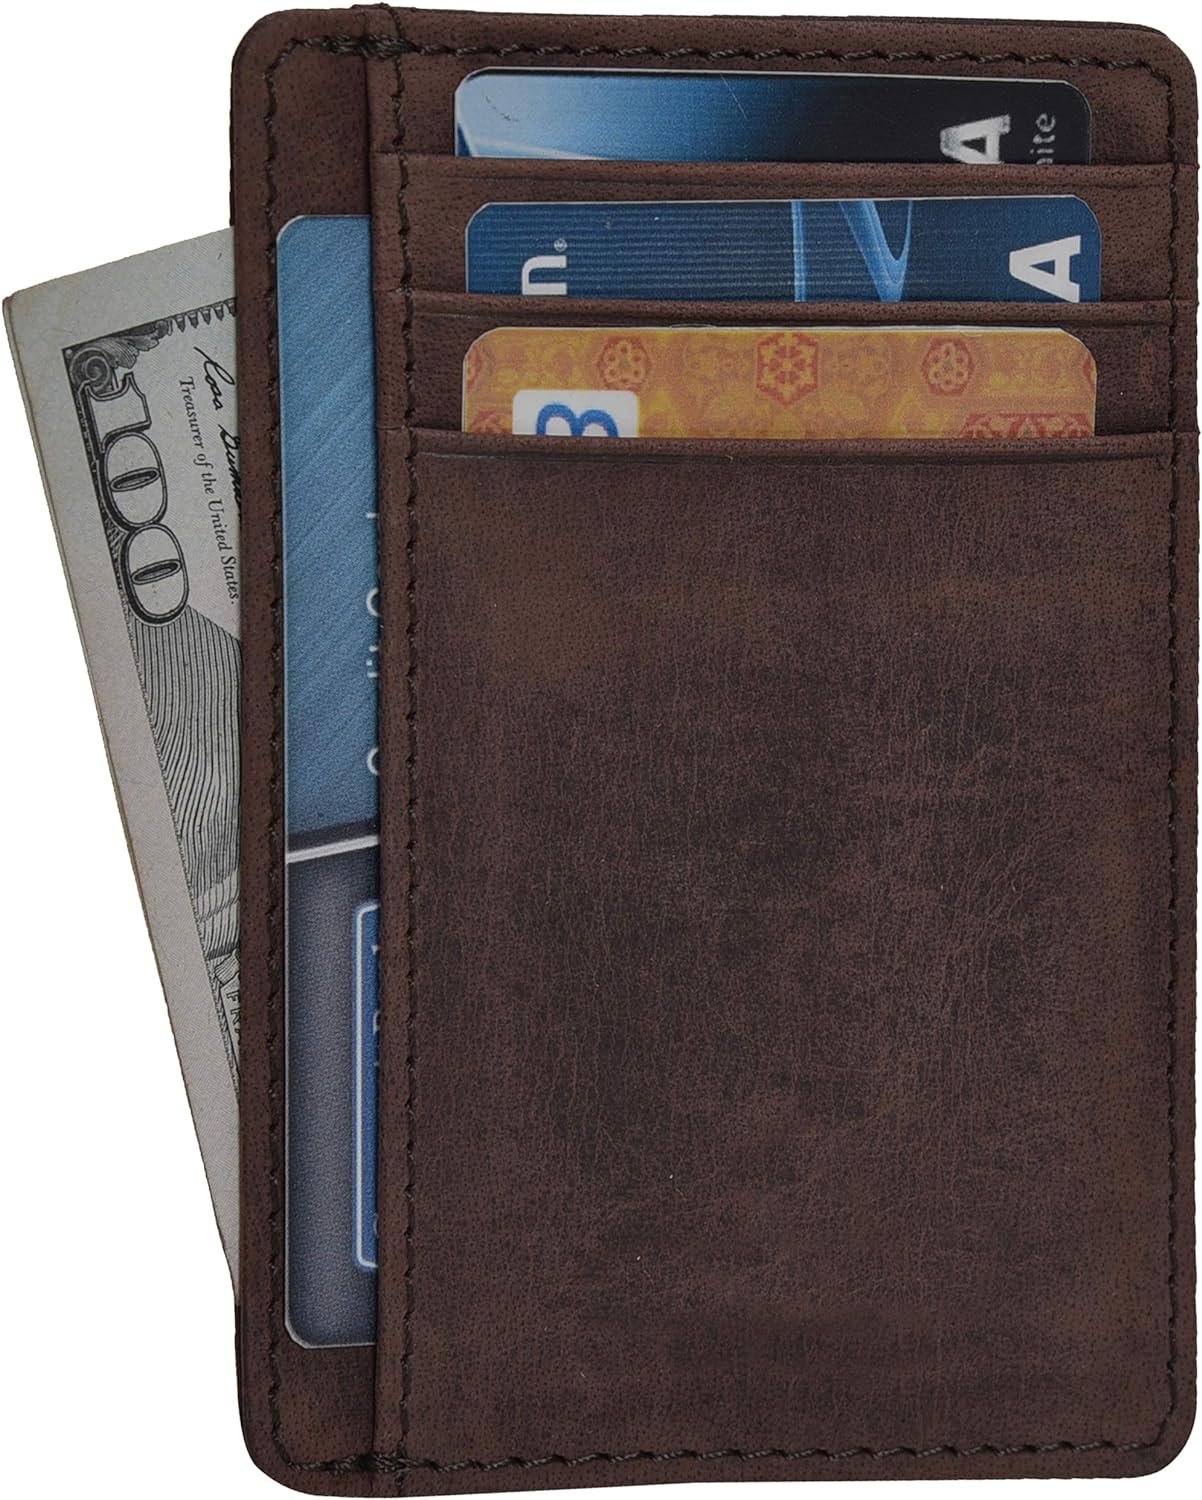 Real Leather Minimalist Wallets for Men Slim RFID Blocking Smart Designer Wallet Review